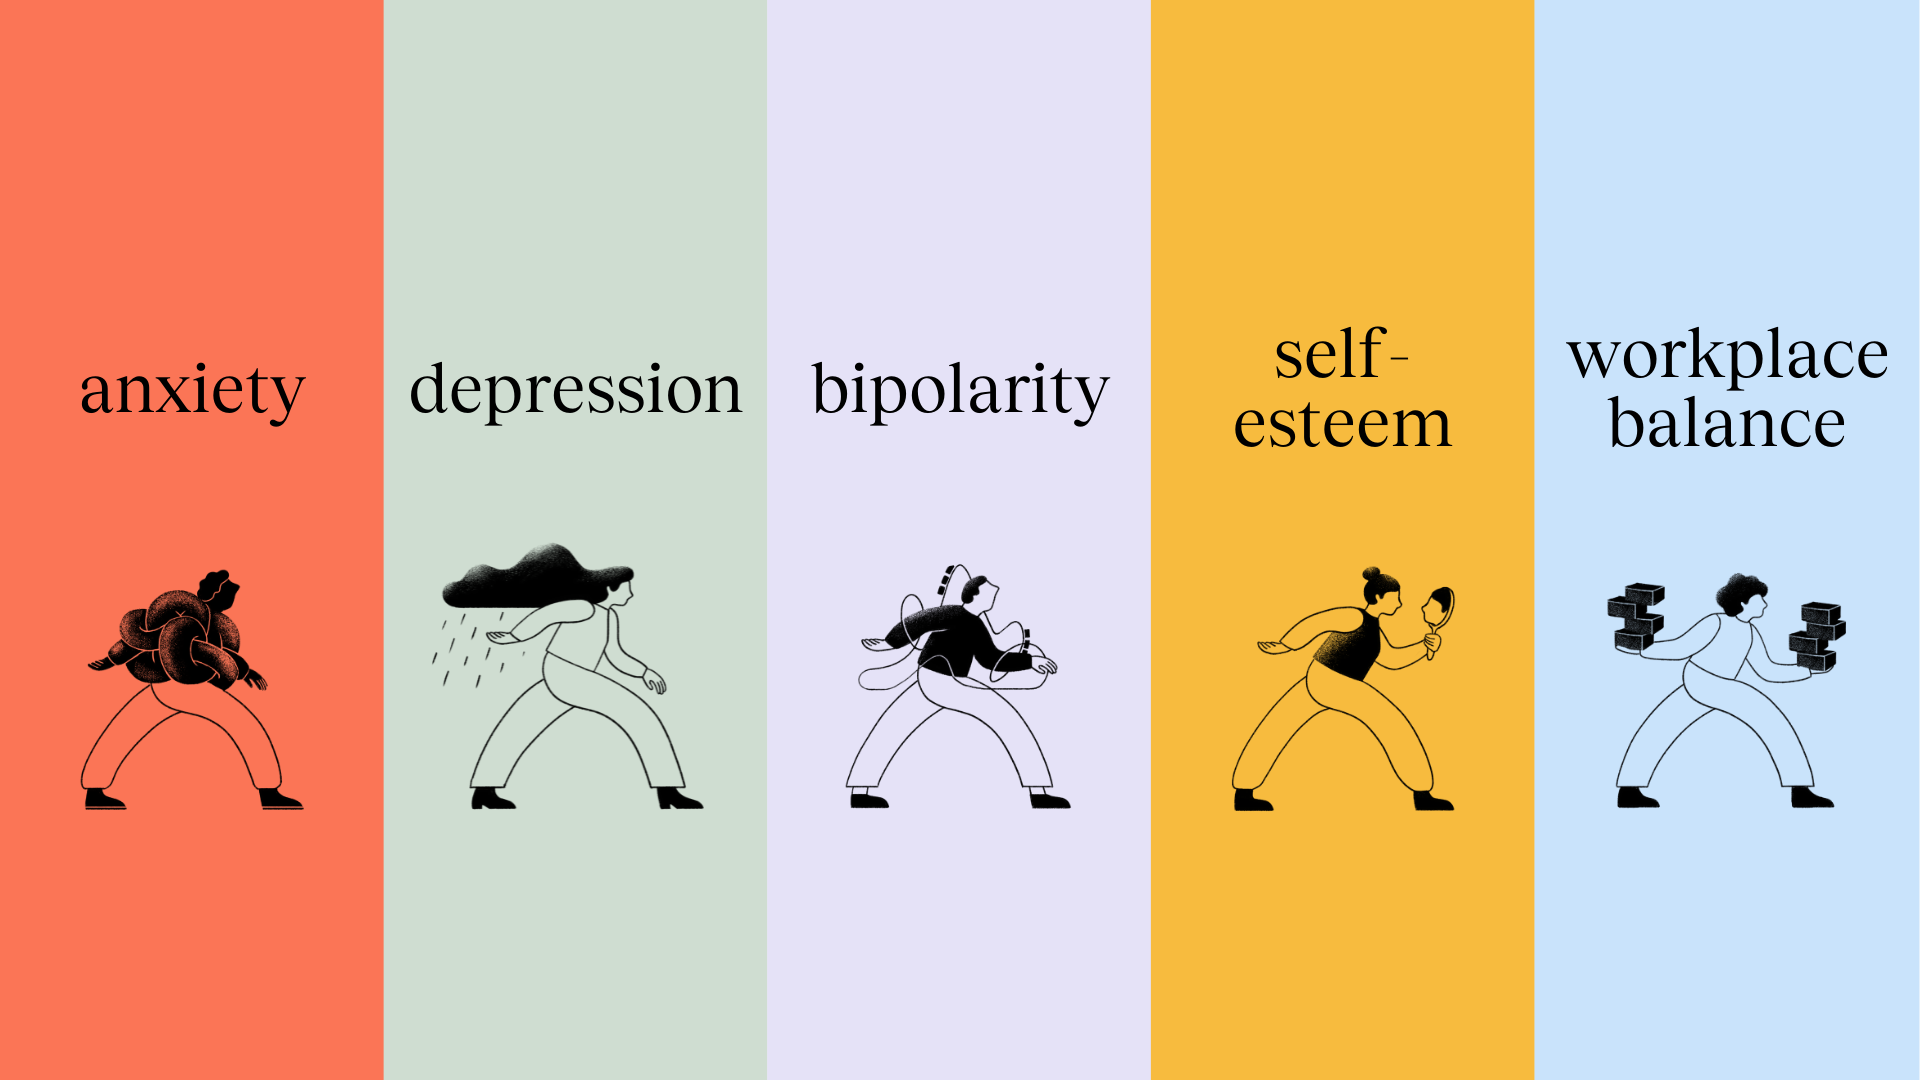 Self-management workshop -Anxiety, Depression, Bipolarity, Self-esteem, Workplace balance